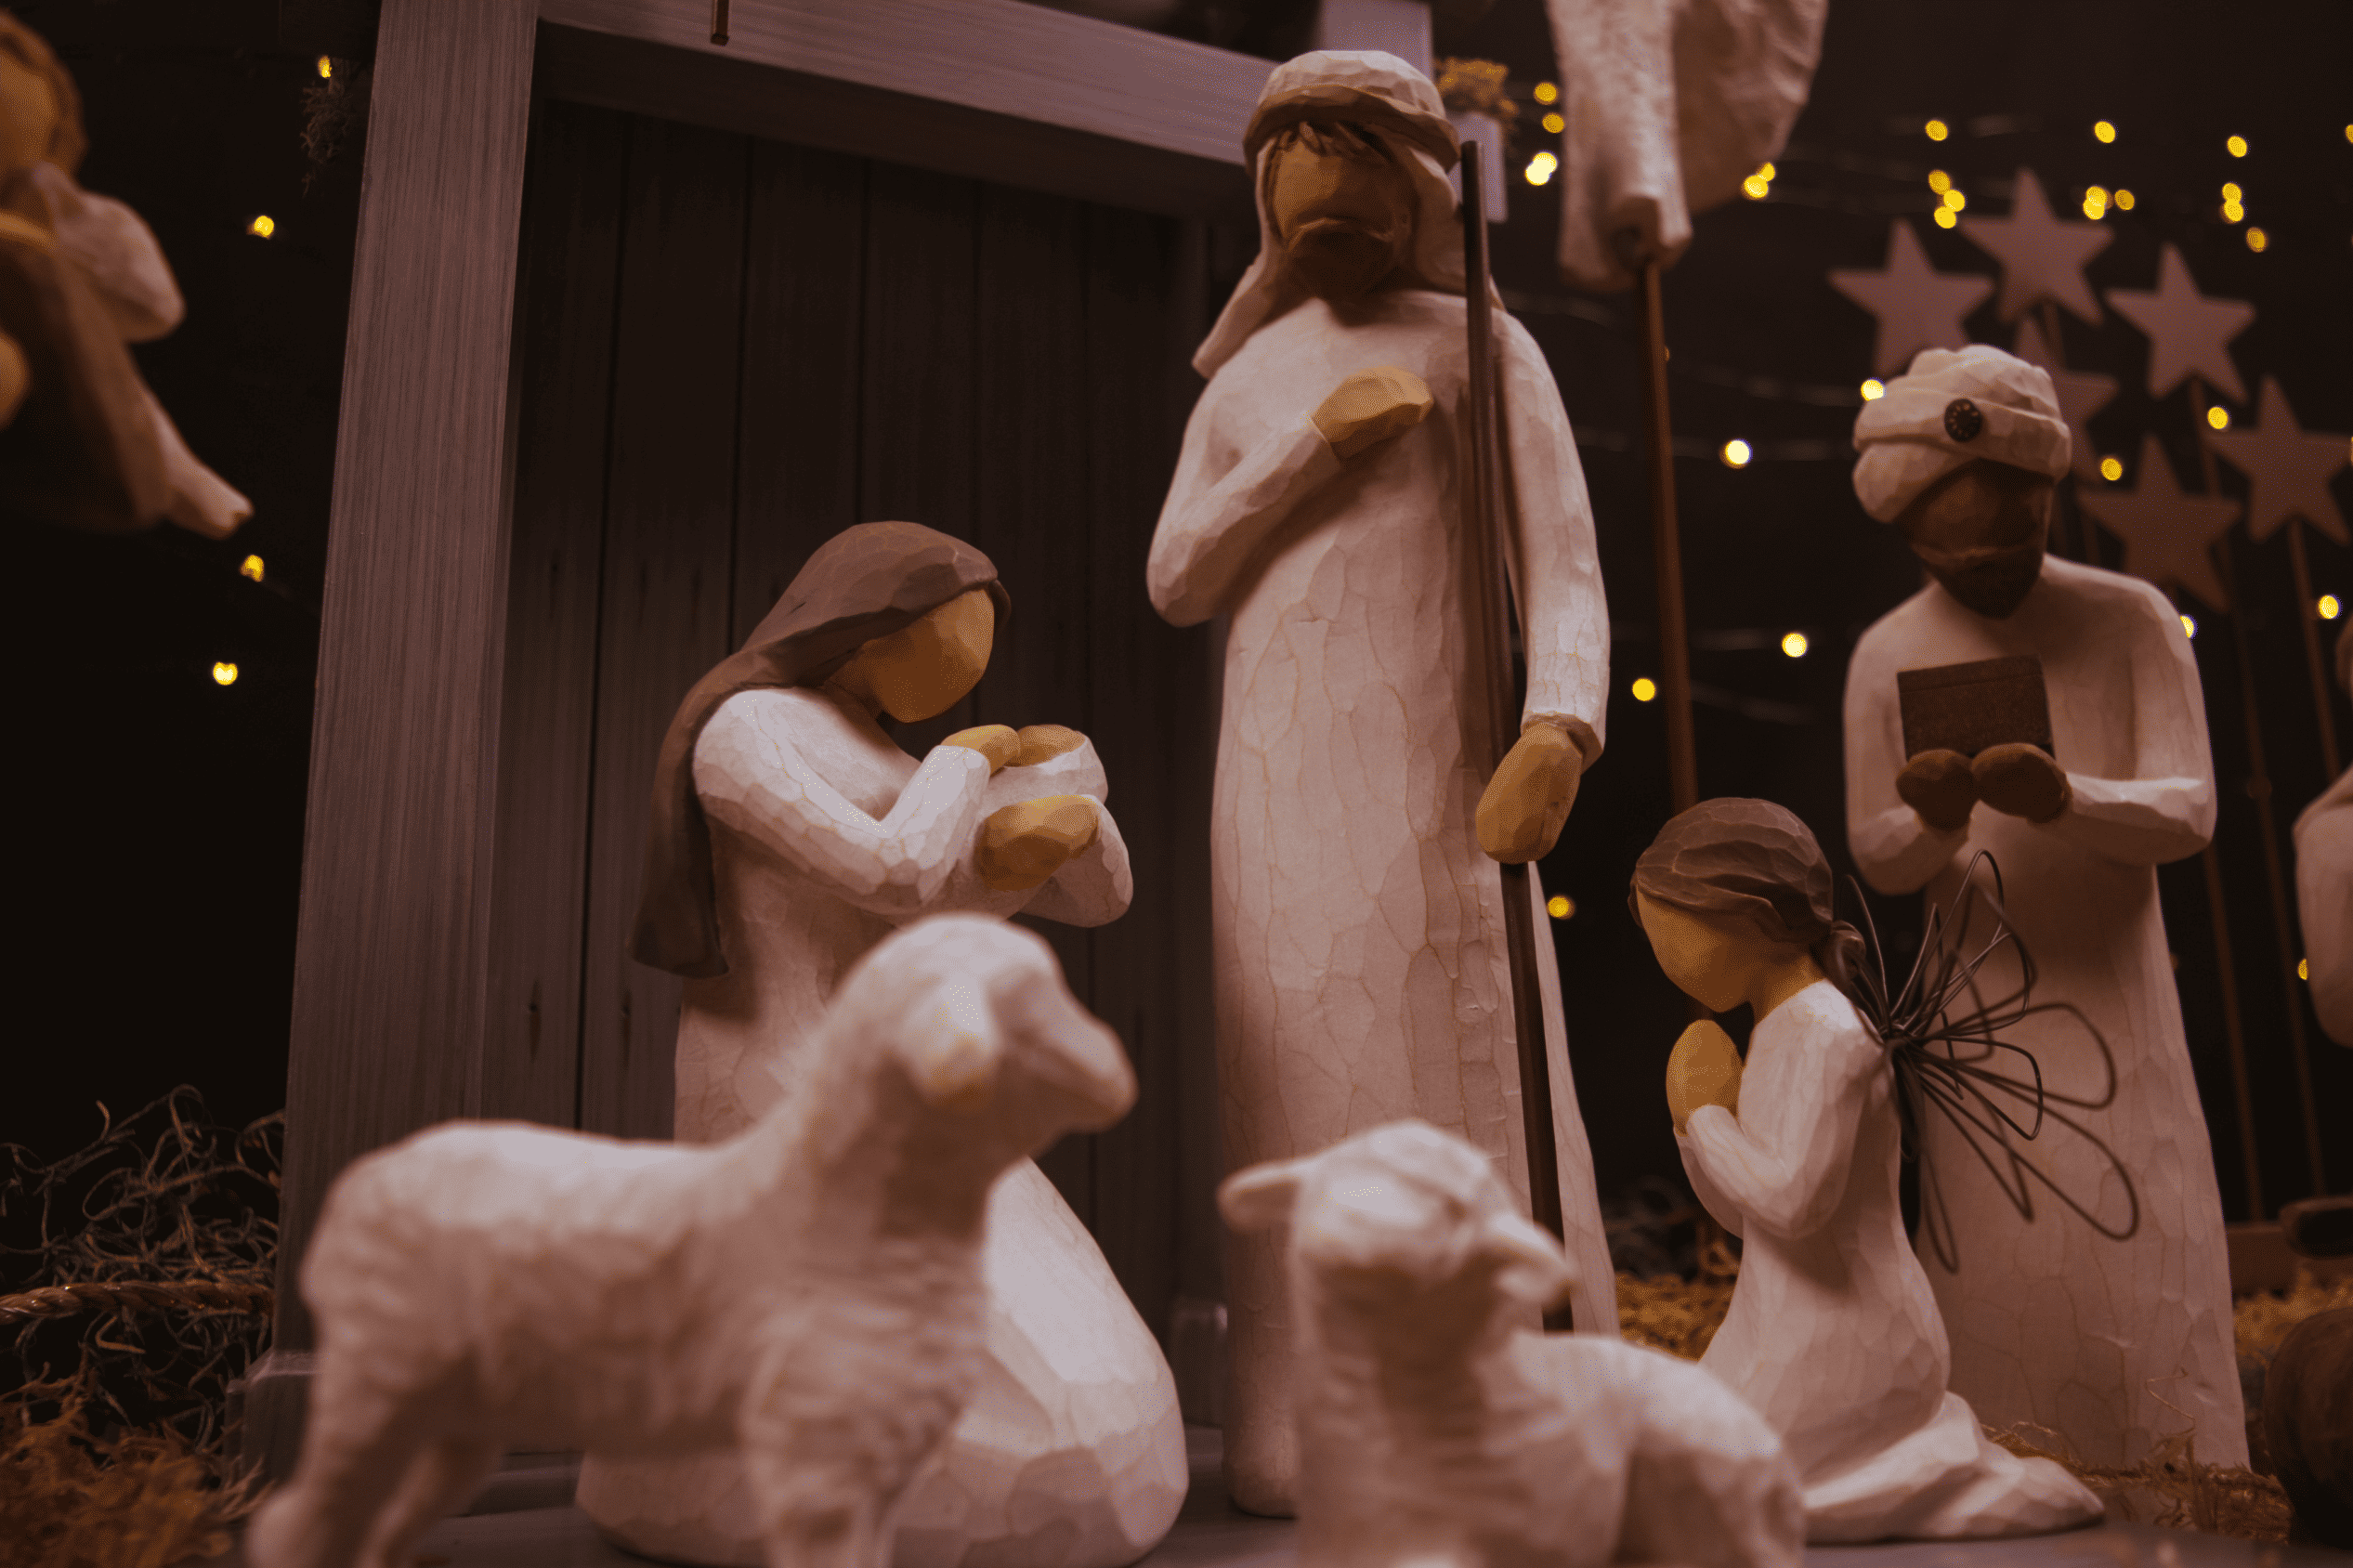 A Christmas nativity set